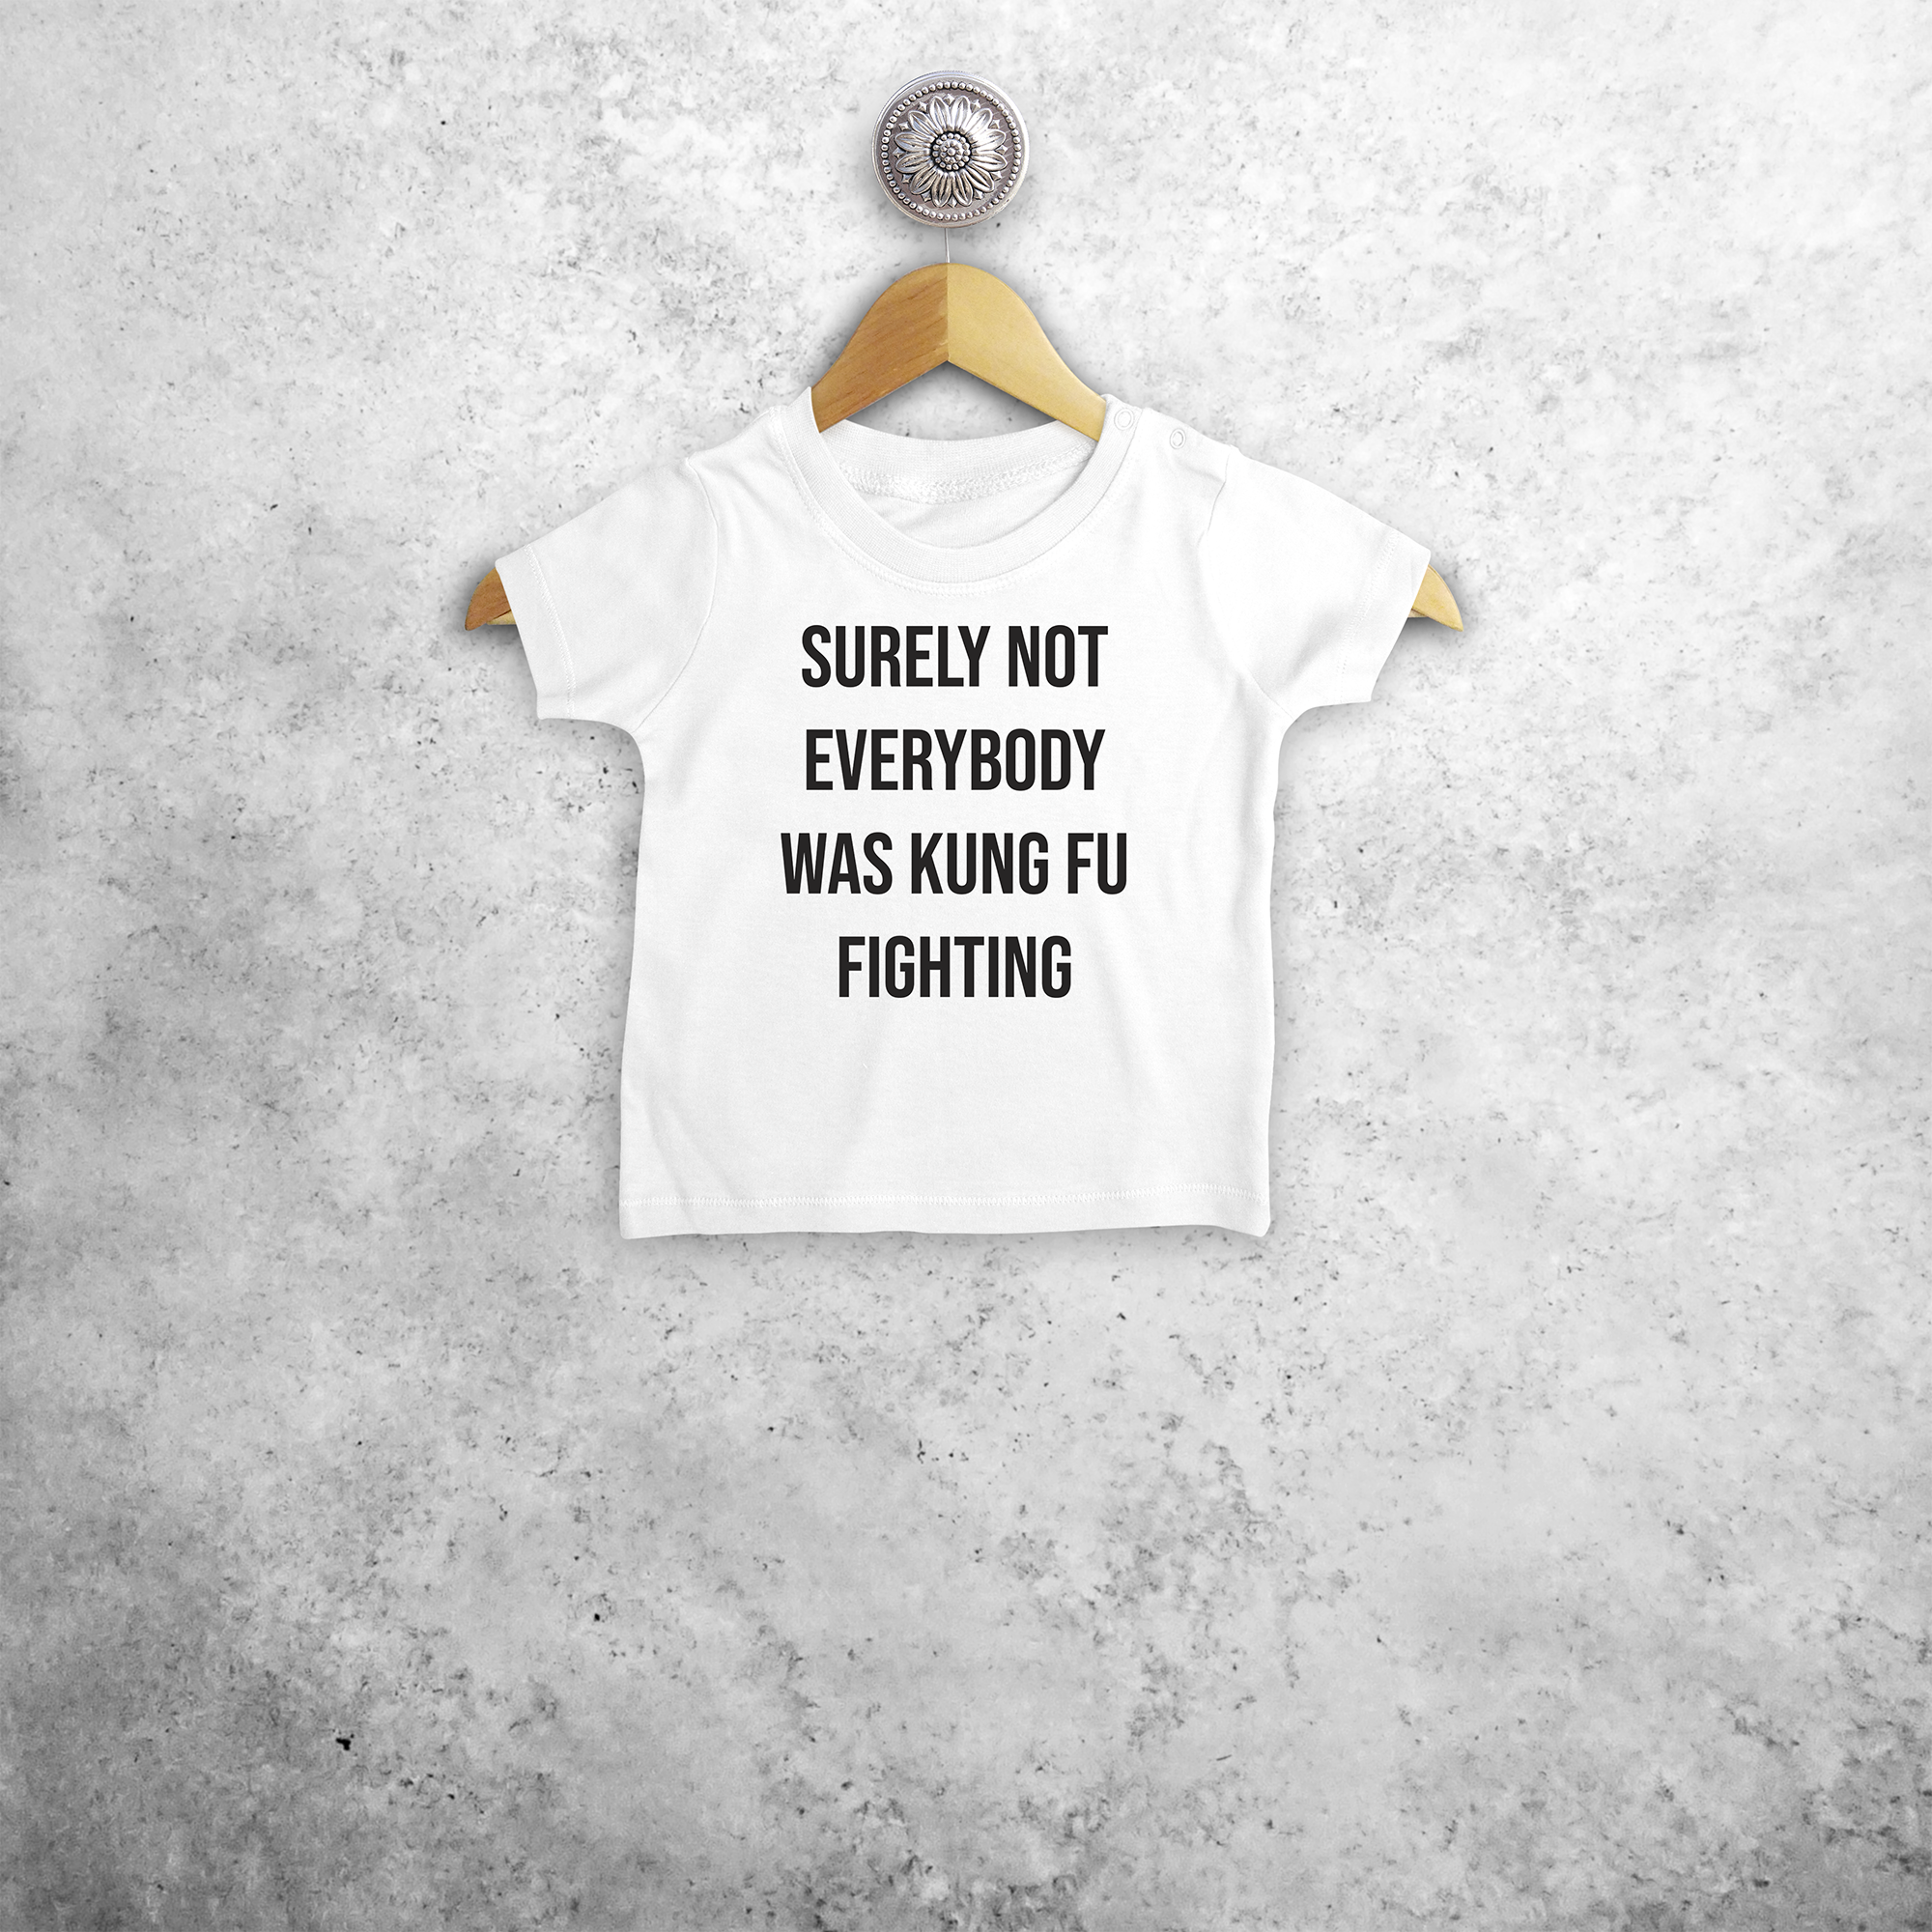 'Surely not everybody was kung fu fighting' baby shortsleeve shirt